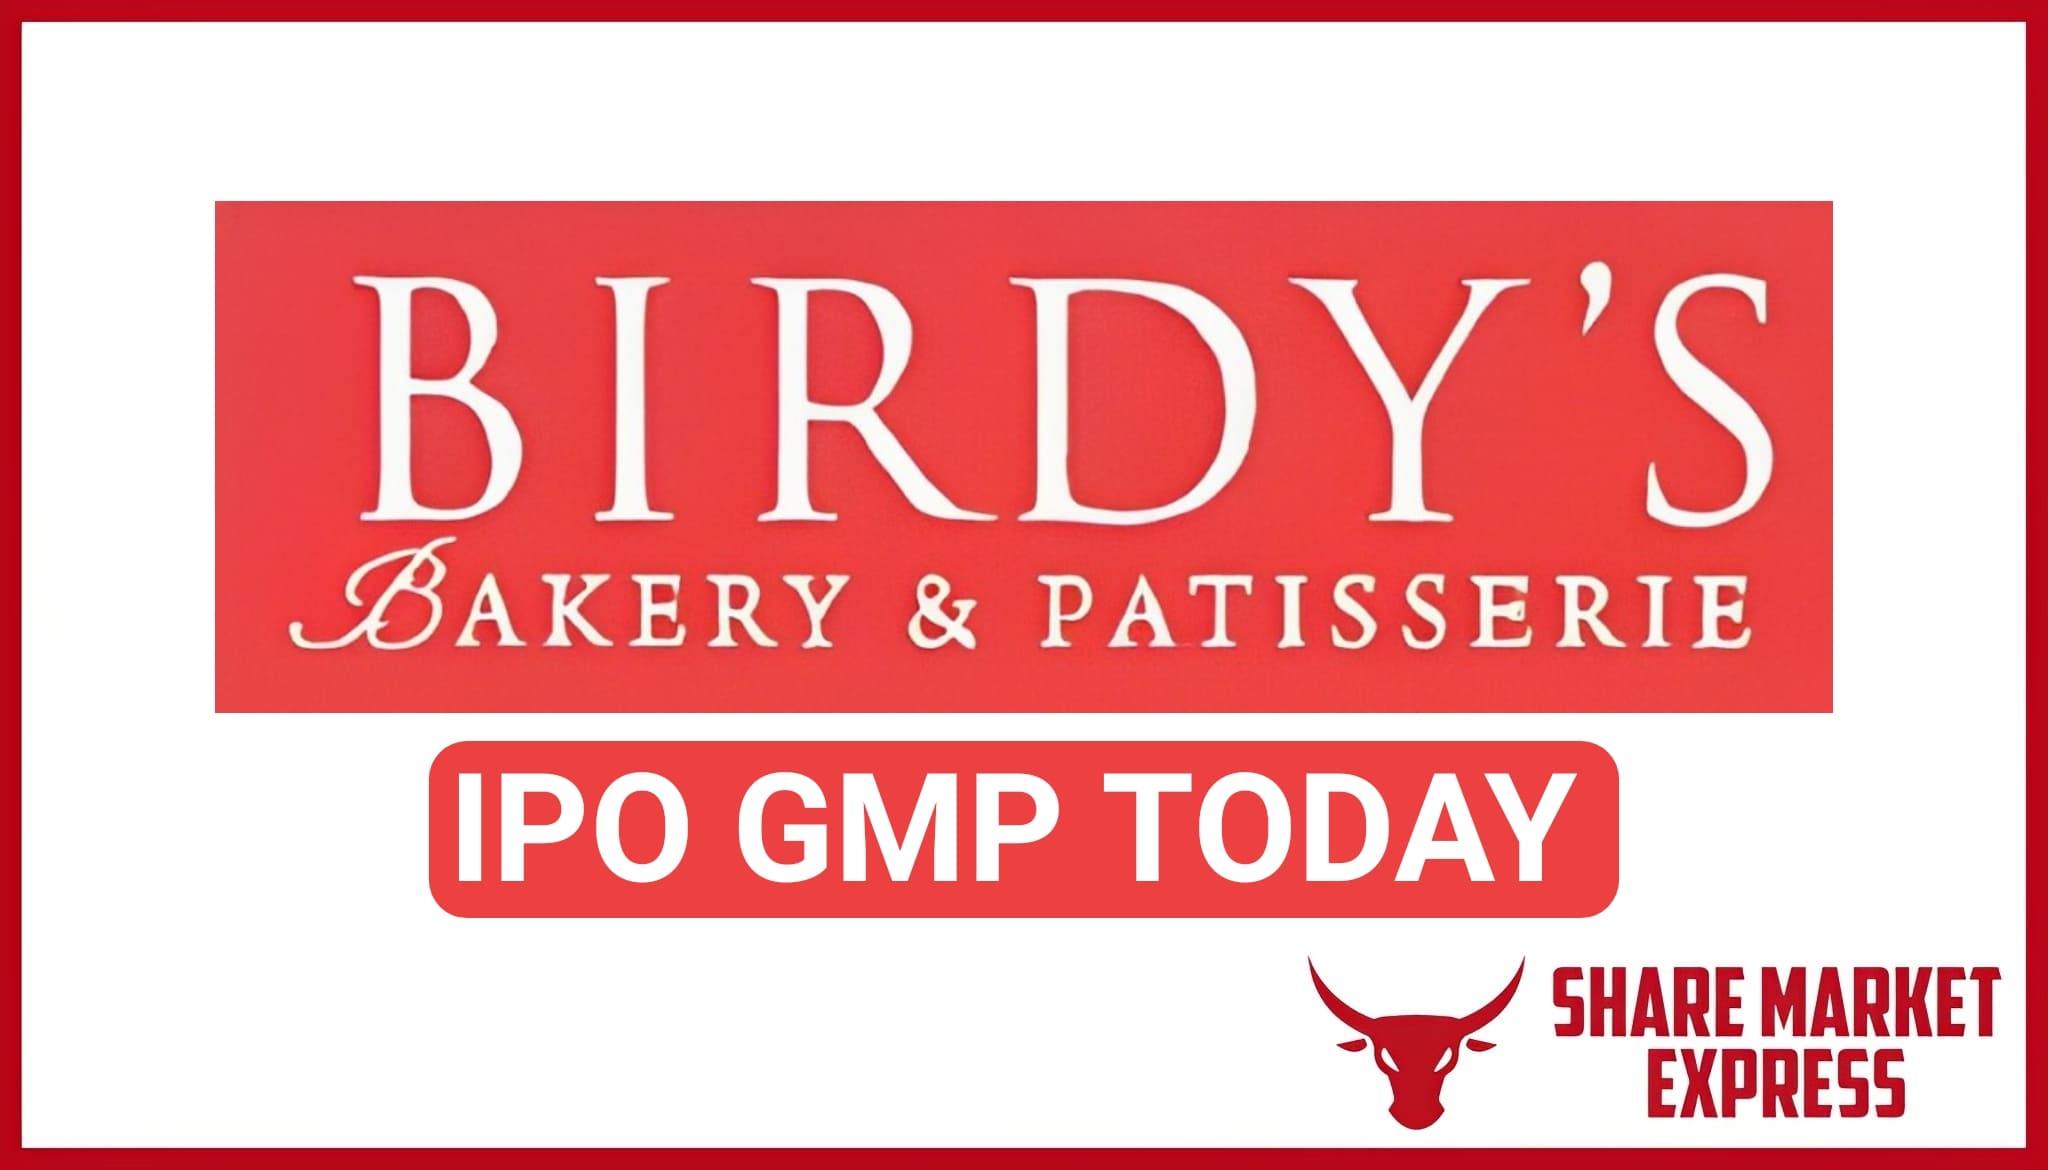 Grill Splendour Services IPO GMP Today